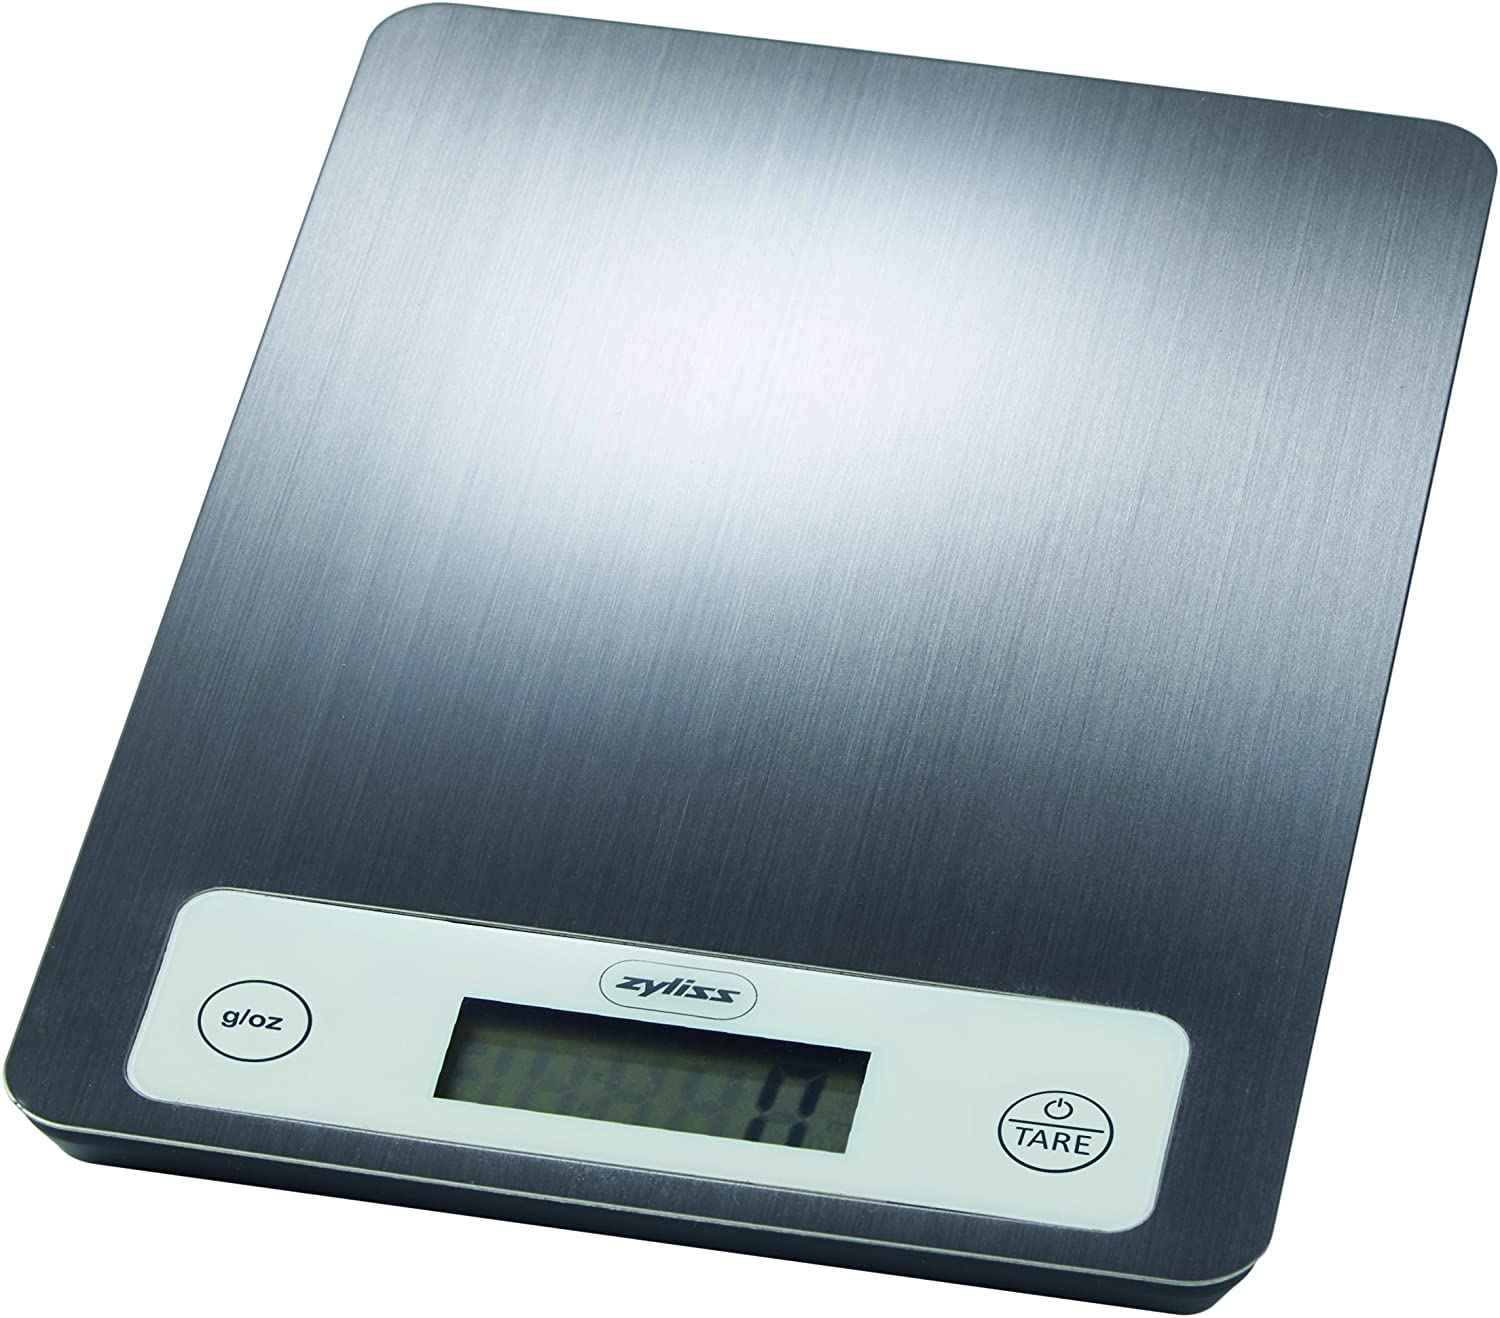 Zyliss ZE970048 Digital Kitchen Scales 5 kg / Tare Function Steel